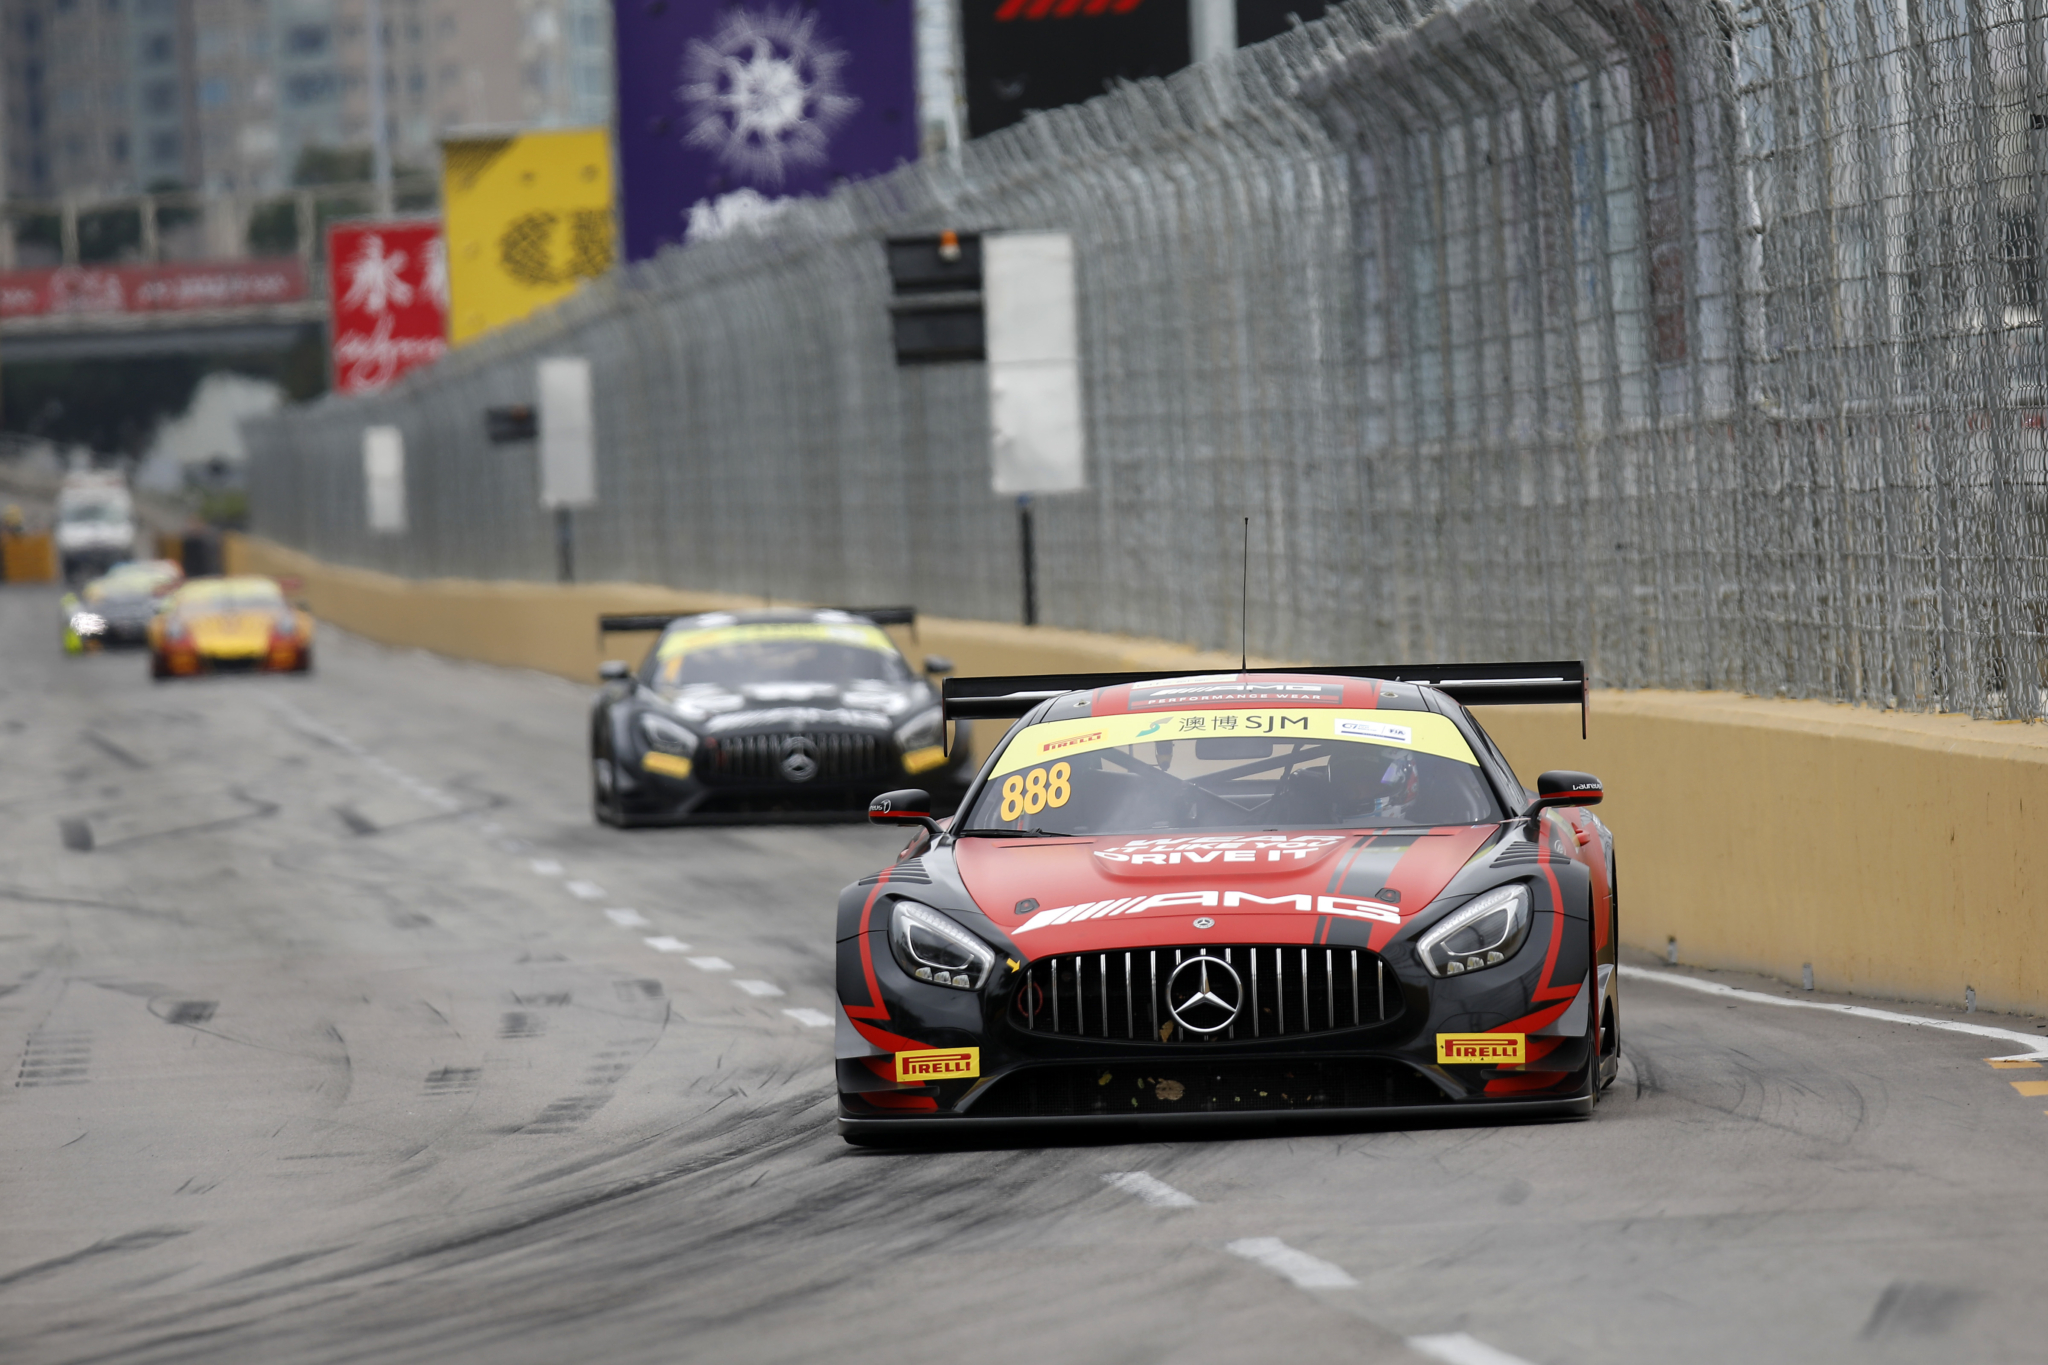 Pirelli returns to the Macau Grand Prix